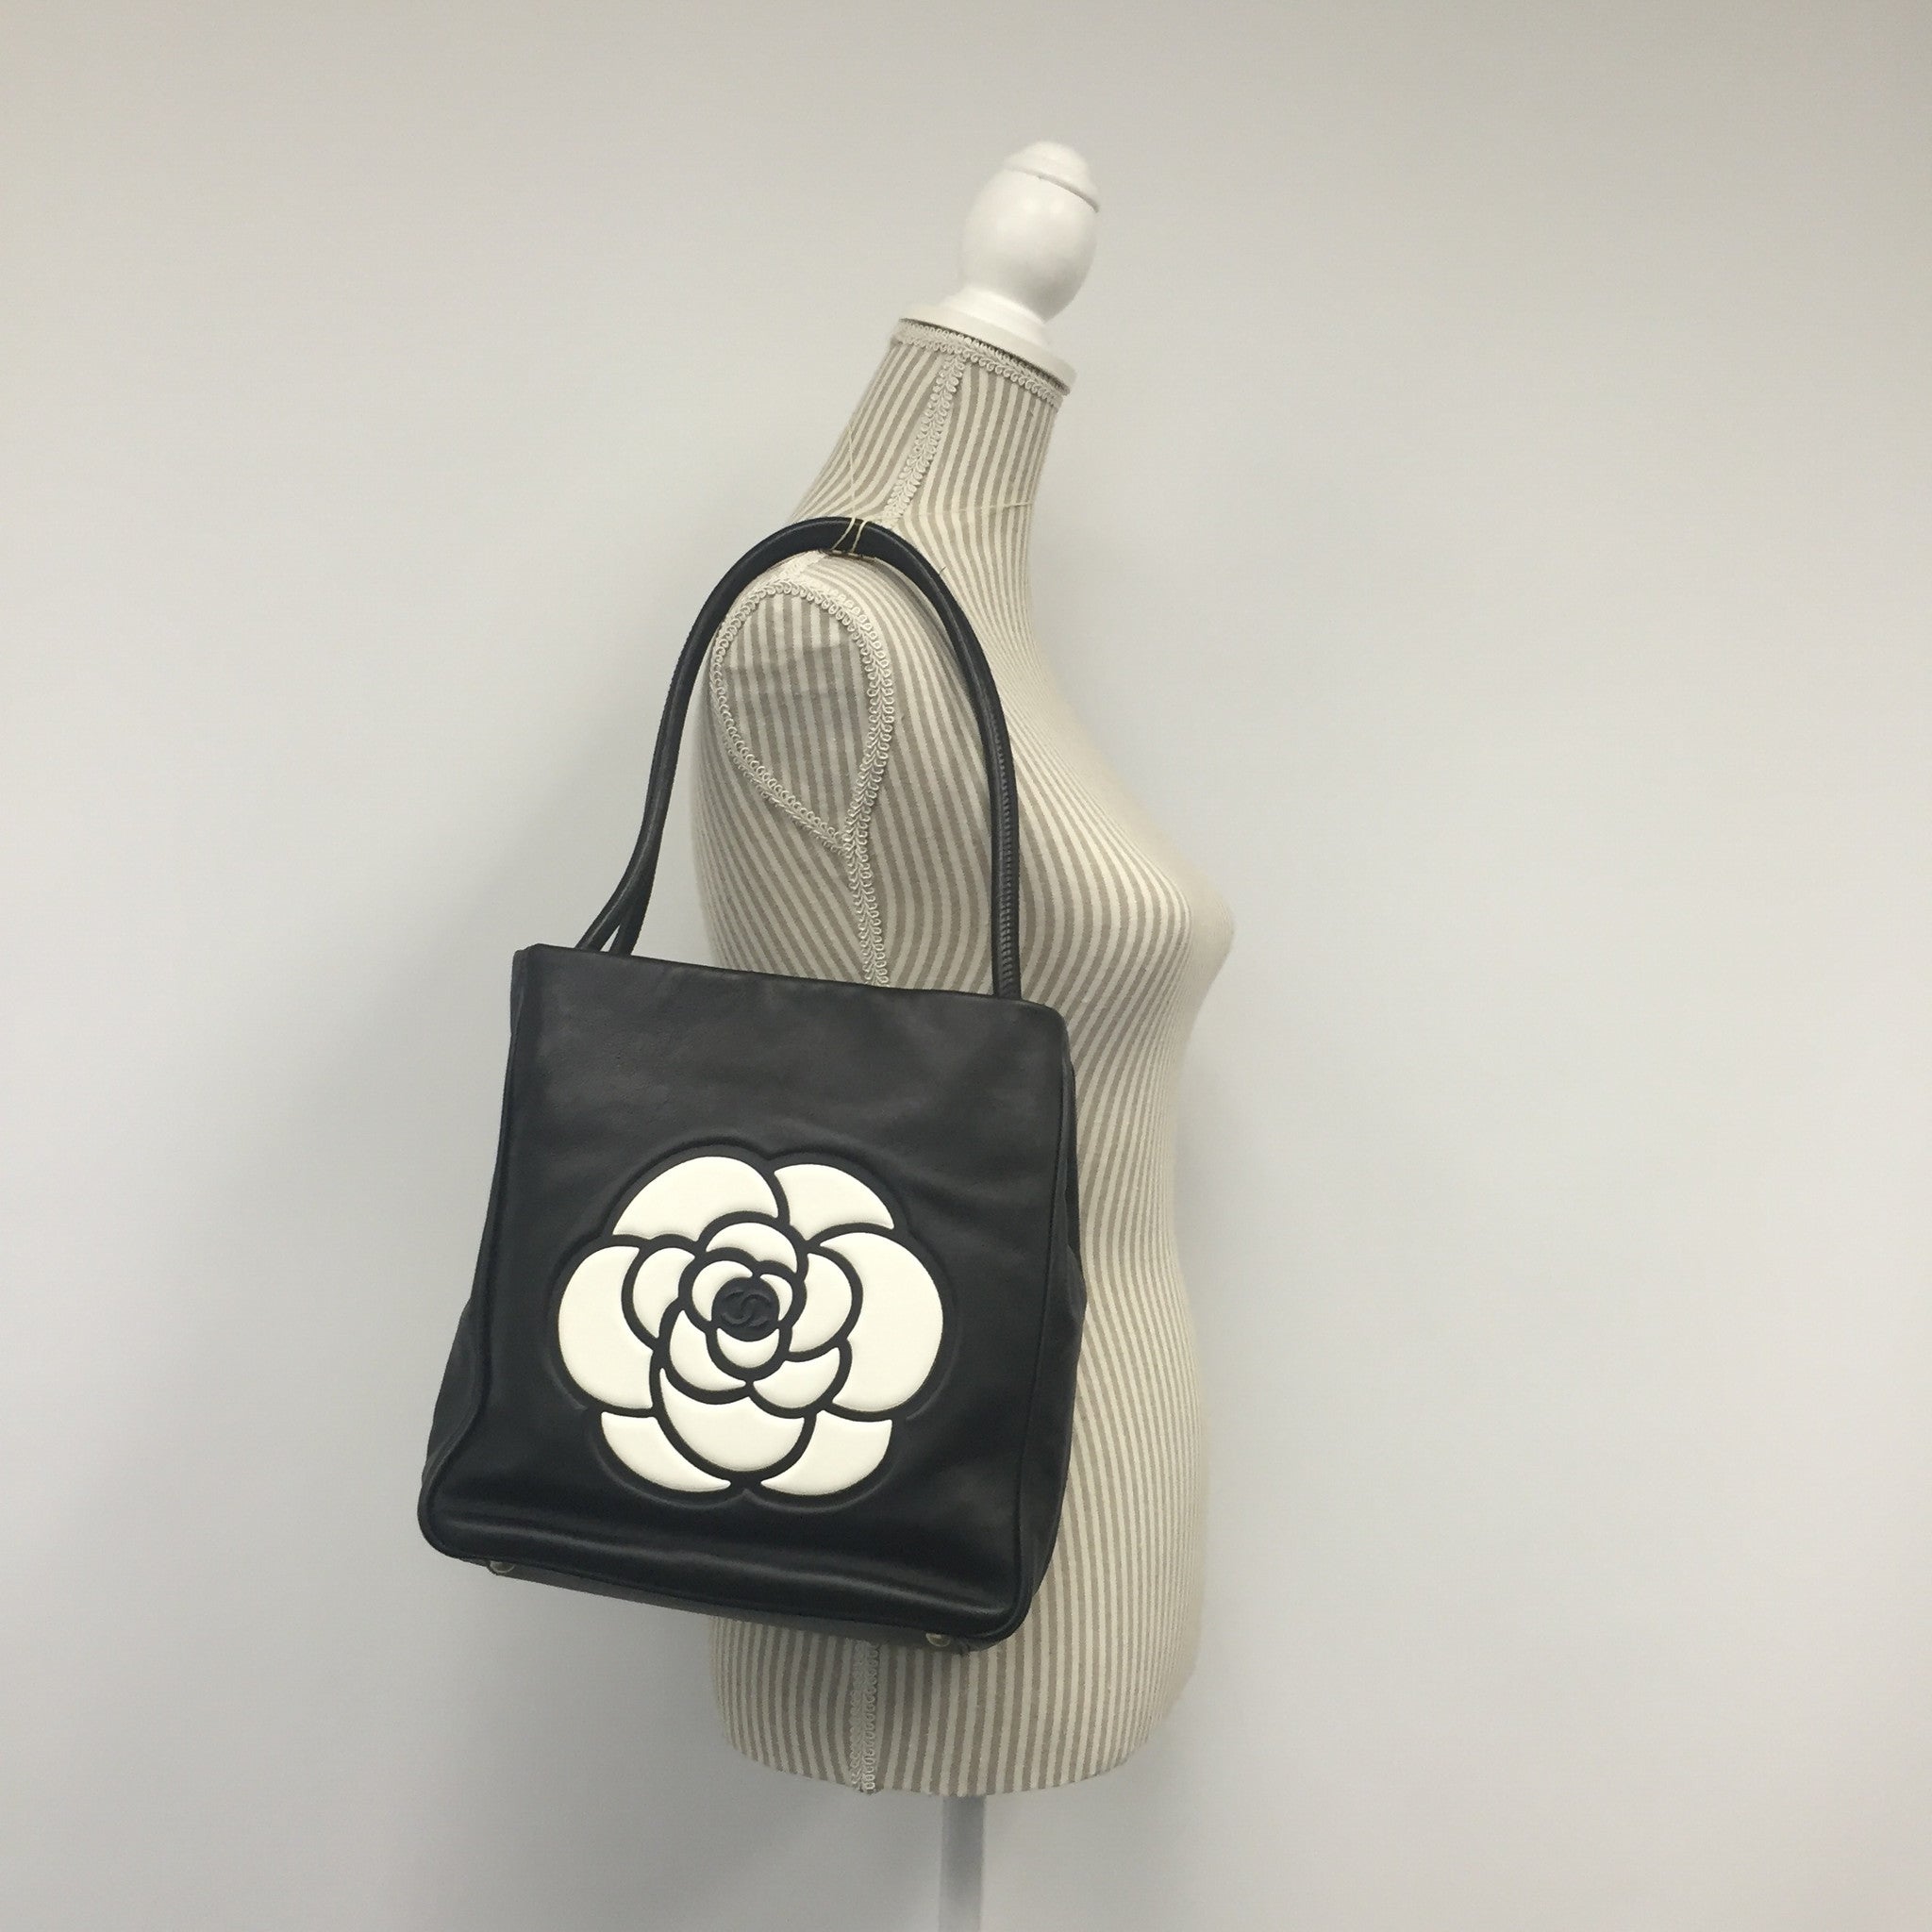 Chanel Black Leather Handbag with Camellia